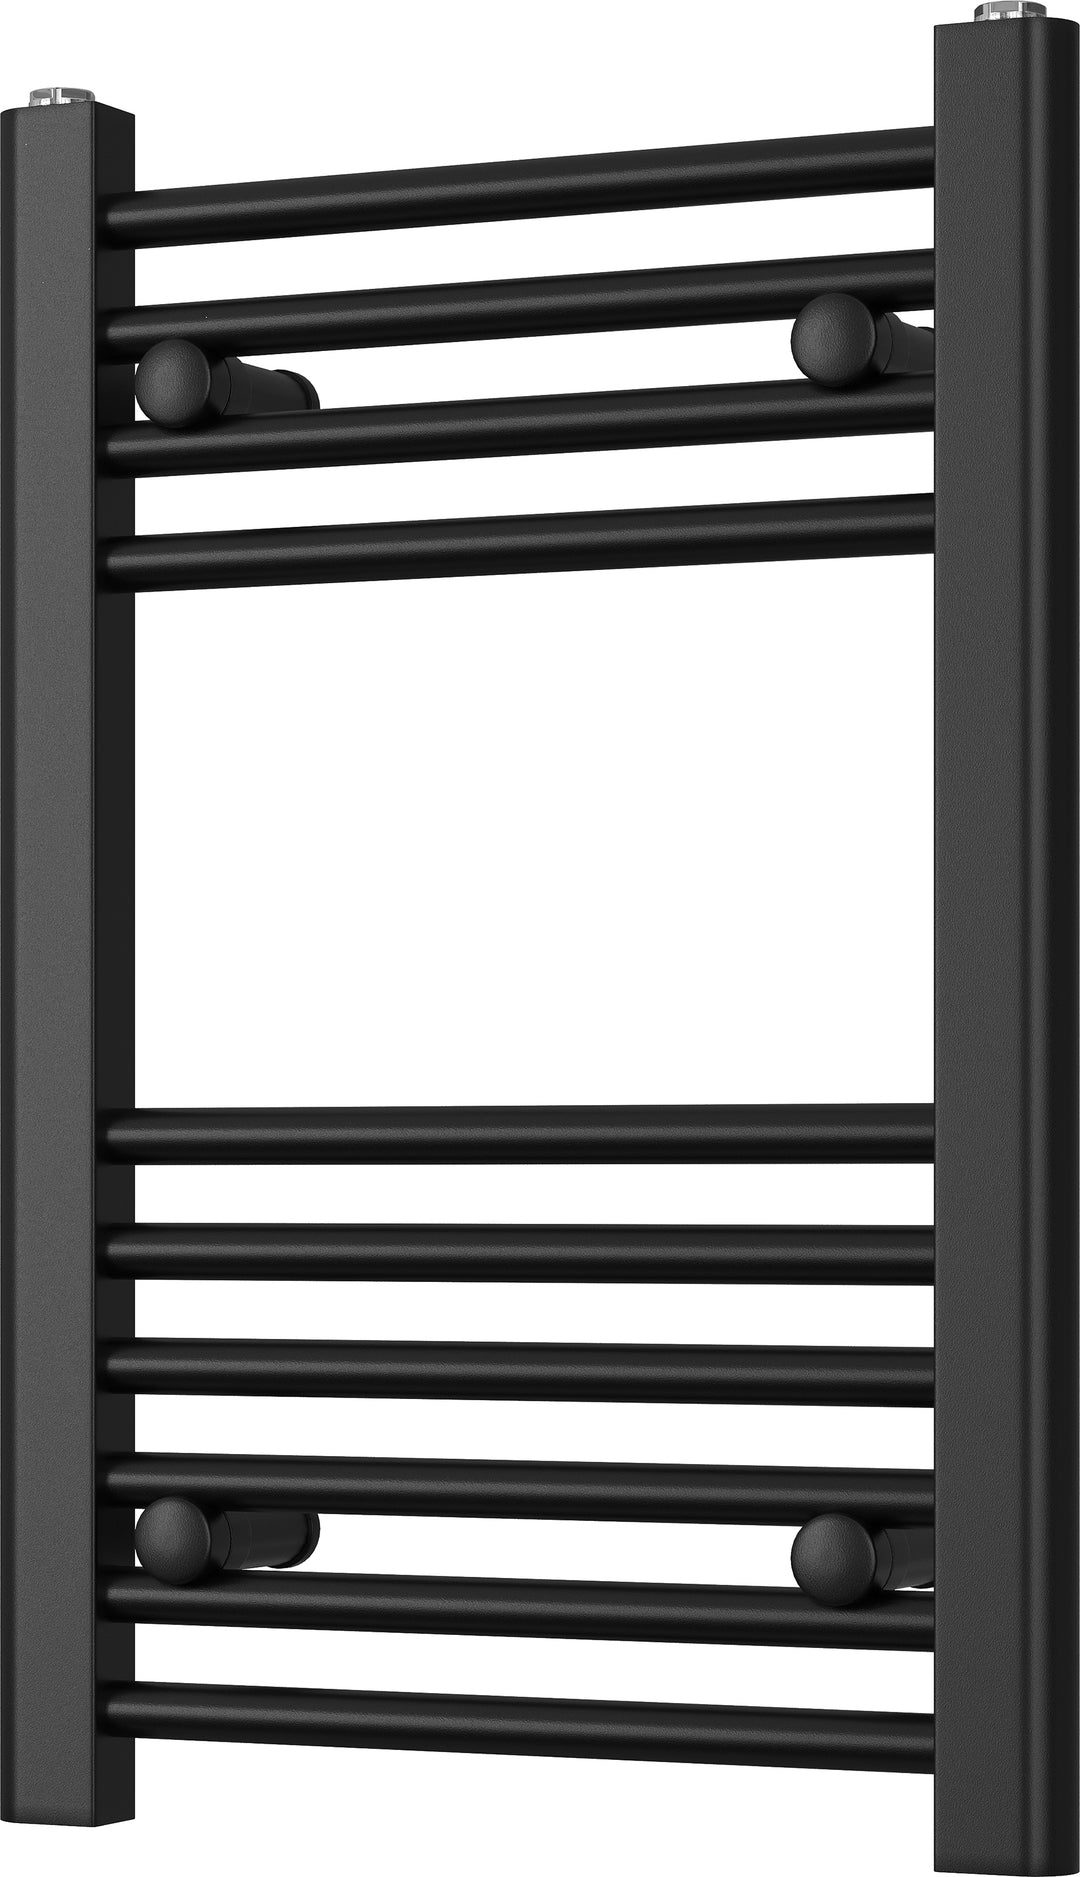 Zennor - Black Heated Towel Rail - H600mm x W400mm - Straight